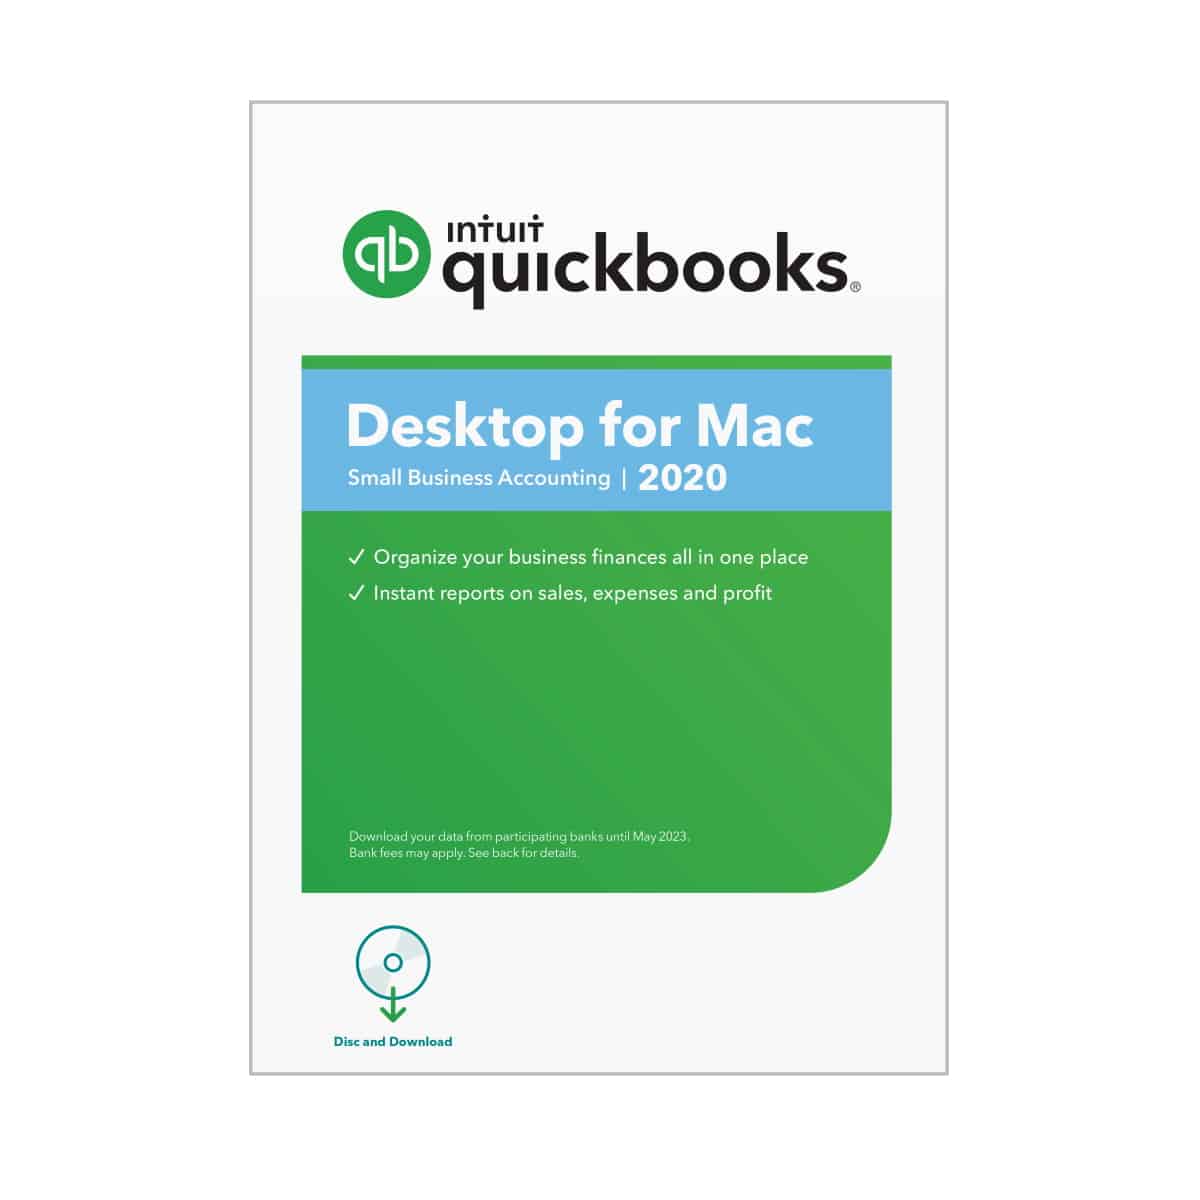 quickbooks for mac limitations